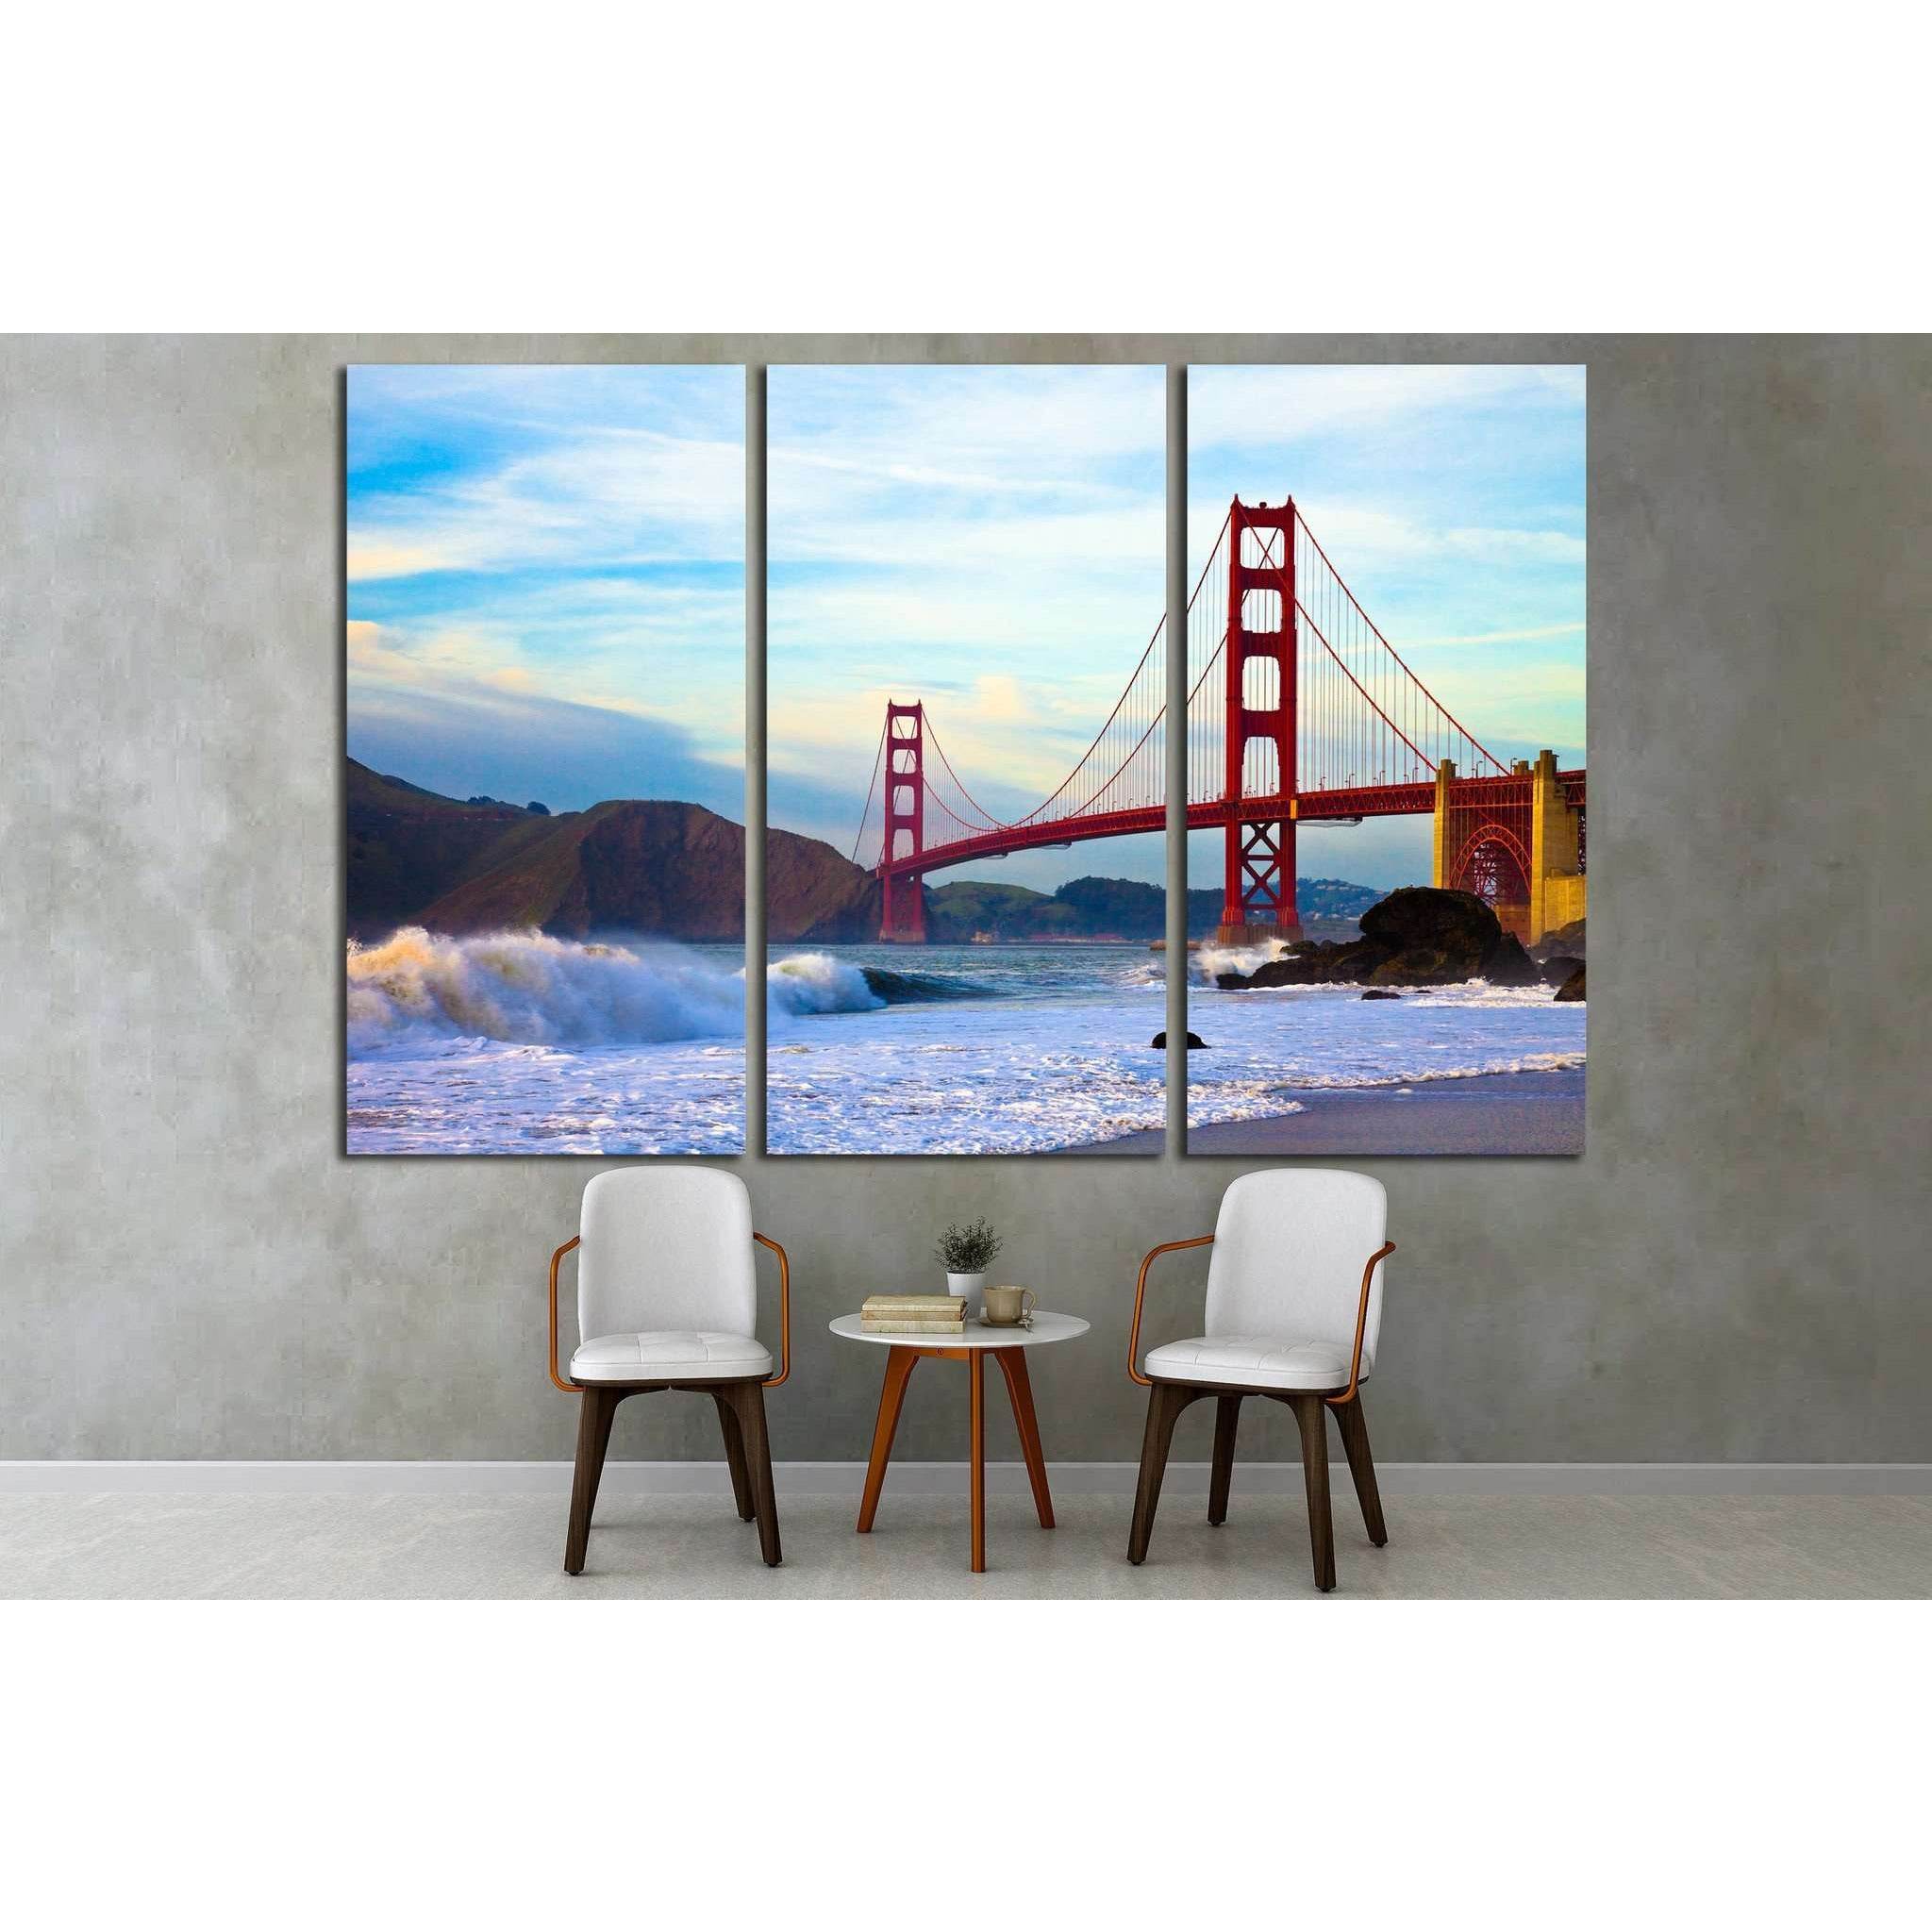 Golden Gate Bridge, Marshall Beach, San Francisco №1506 Ready to Hang Canvas Print